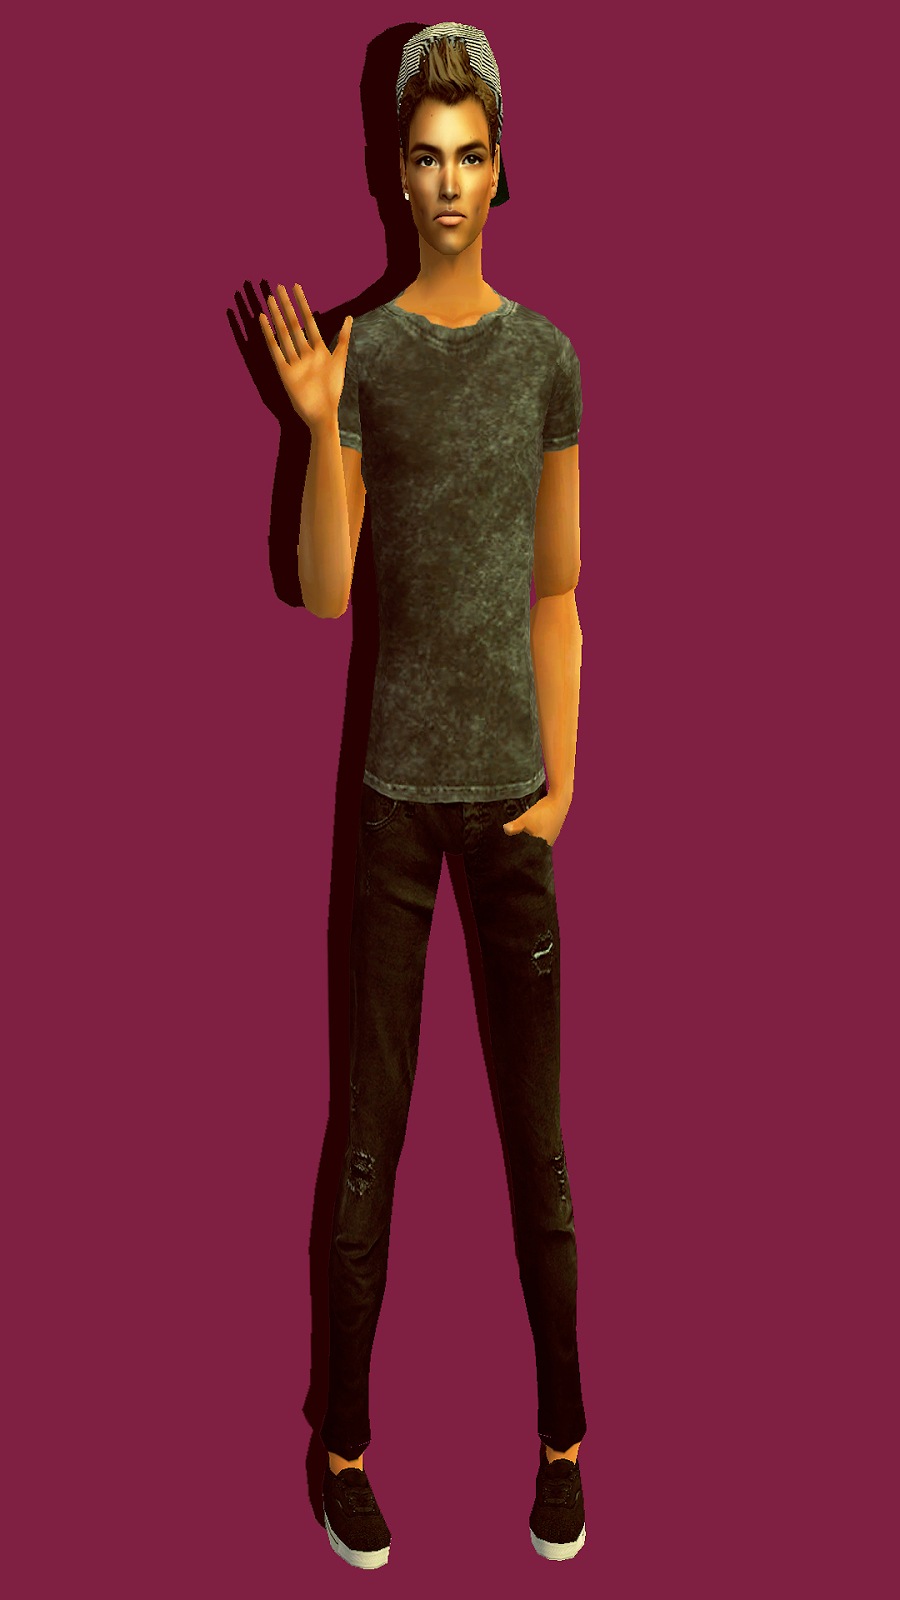 одежда -  The Sims 2. Мужская одежда: повседневная. - Страница 22 2a